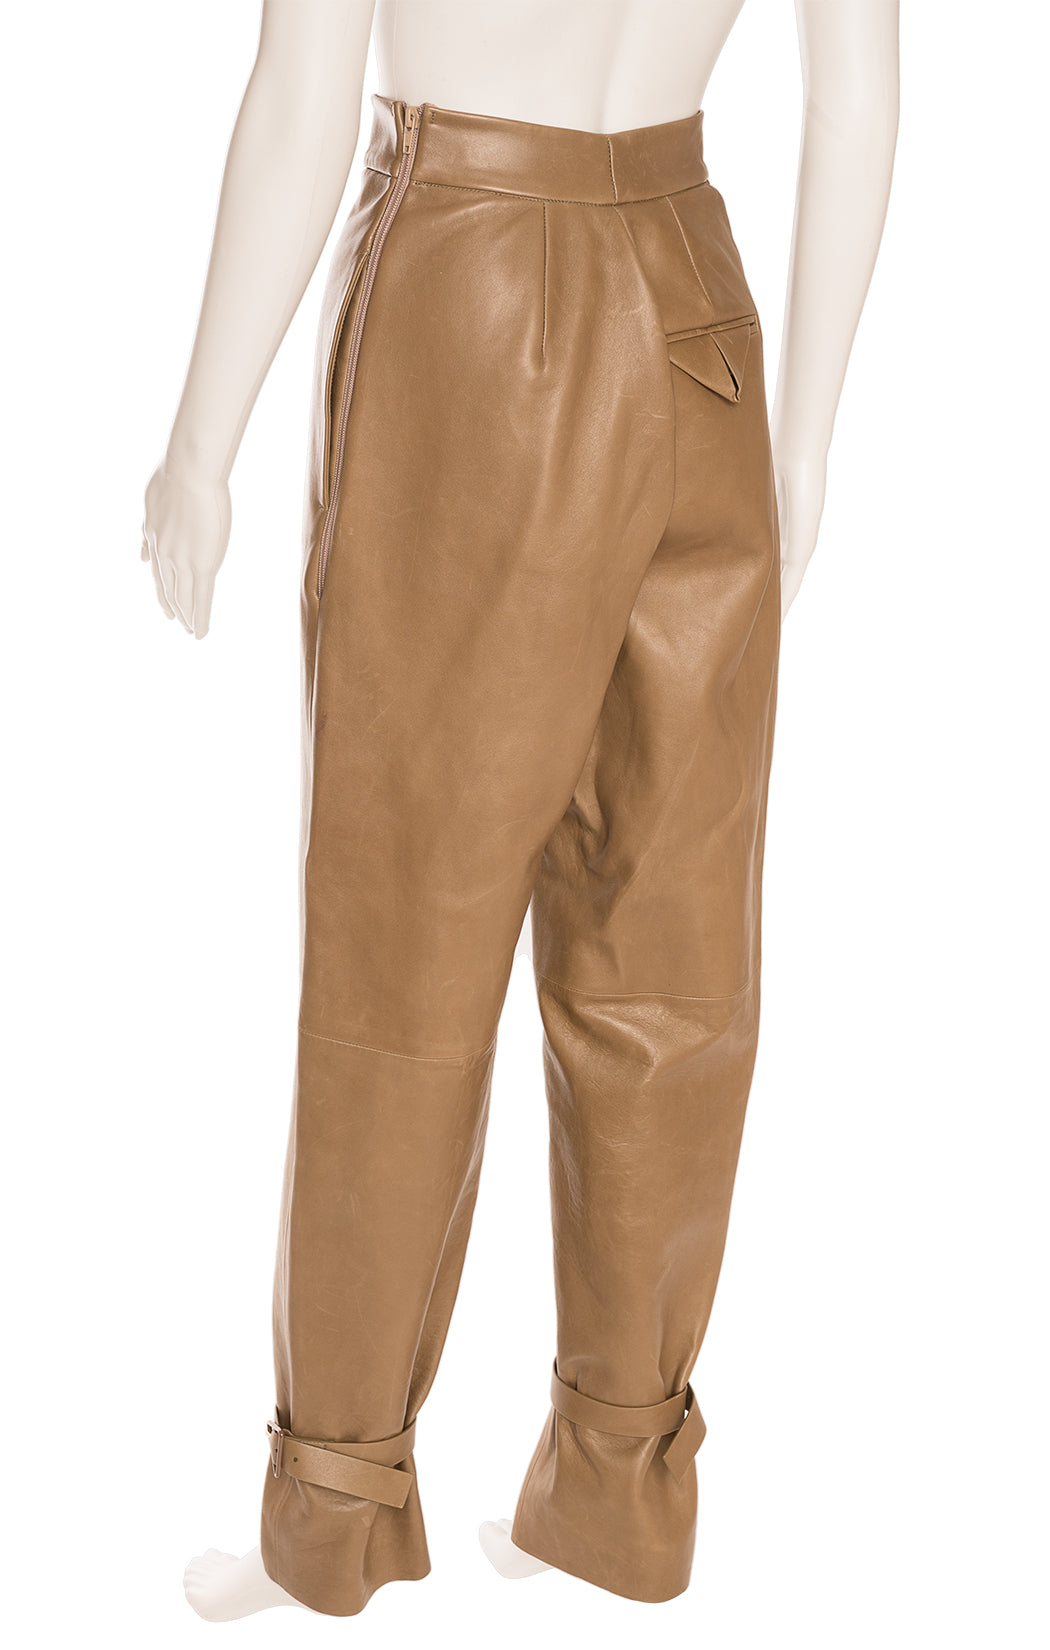 Bottega Veneta® Women's Intrecciato Leather Pants in Cruise. Shop online  now.